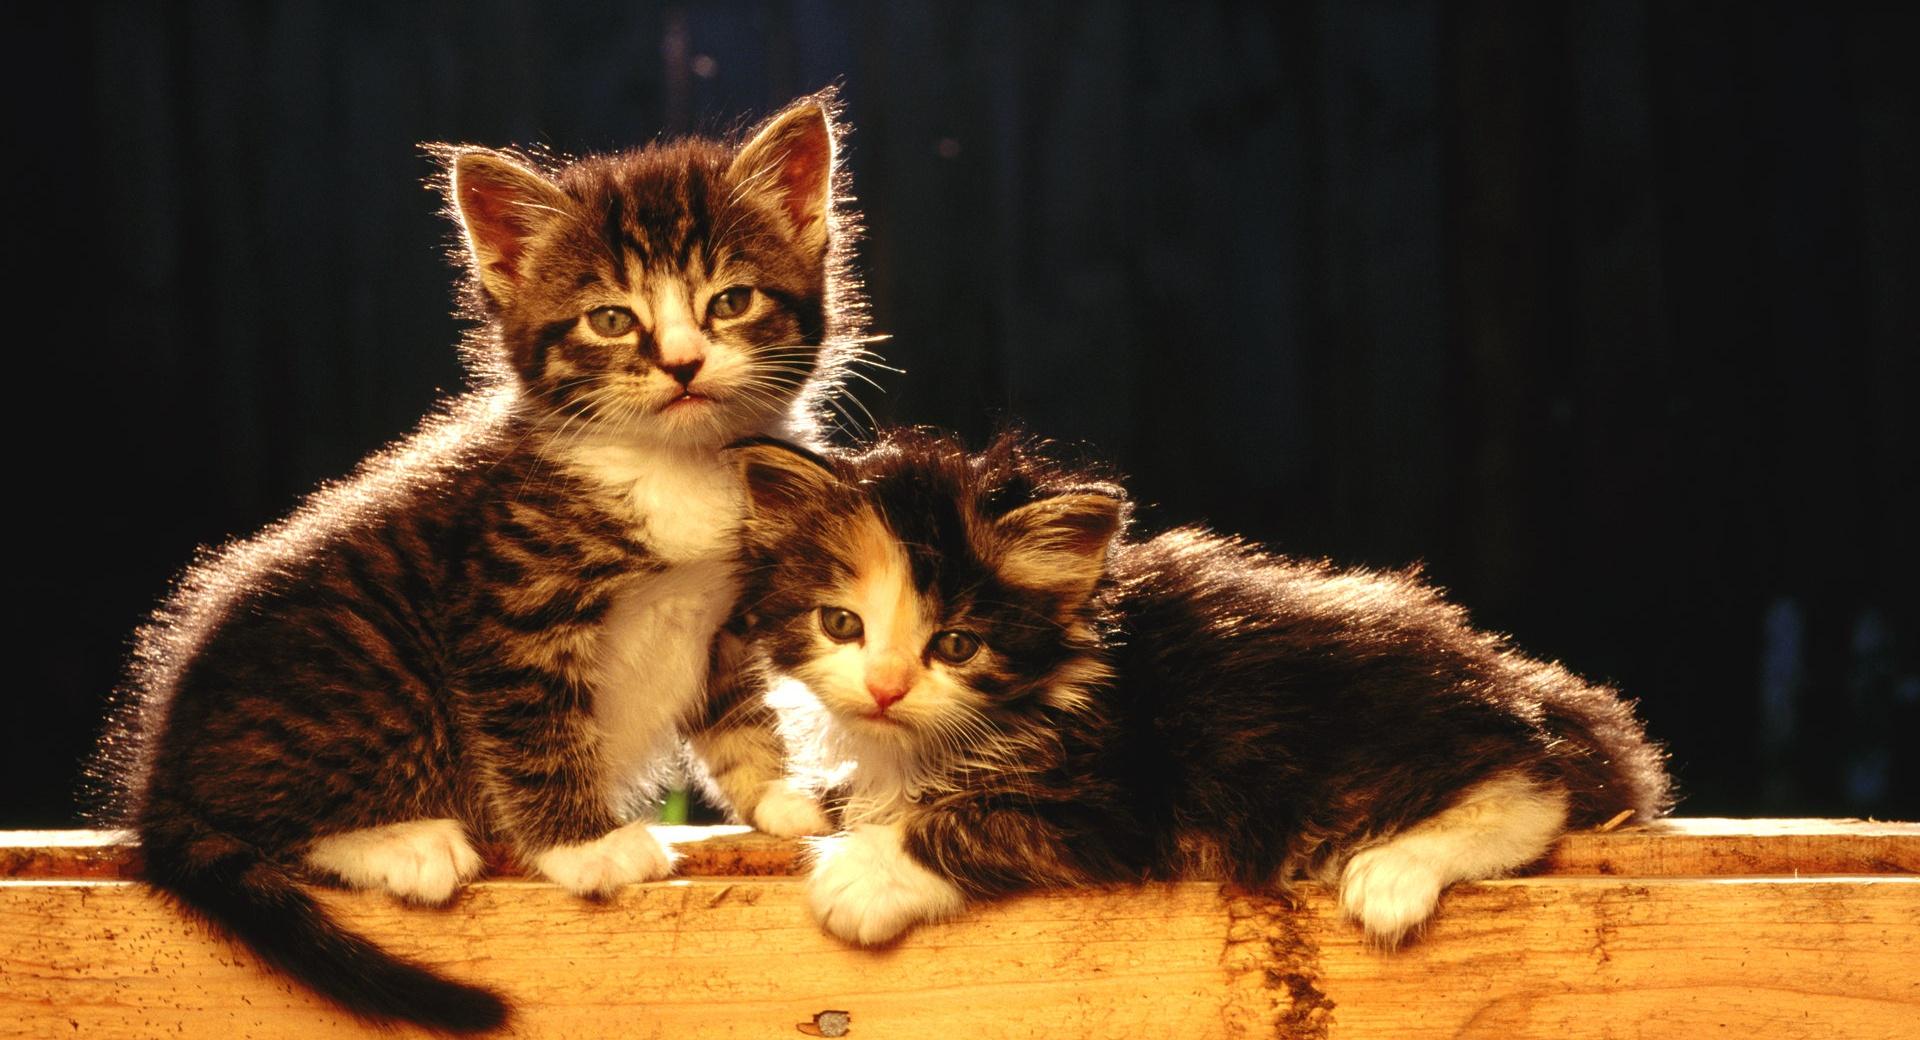 Cute Newborn Kittens at 1152 x 864 size wallpapers HD quality